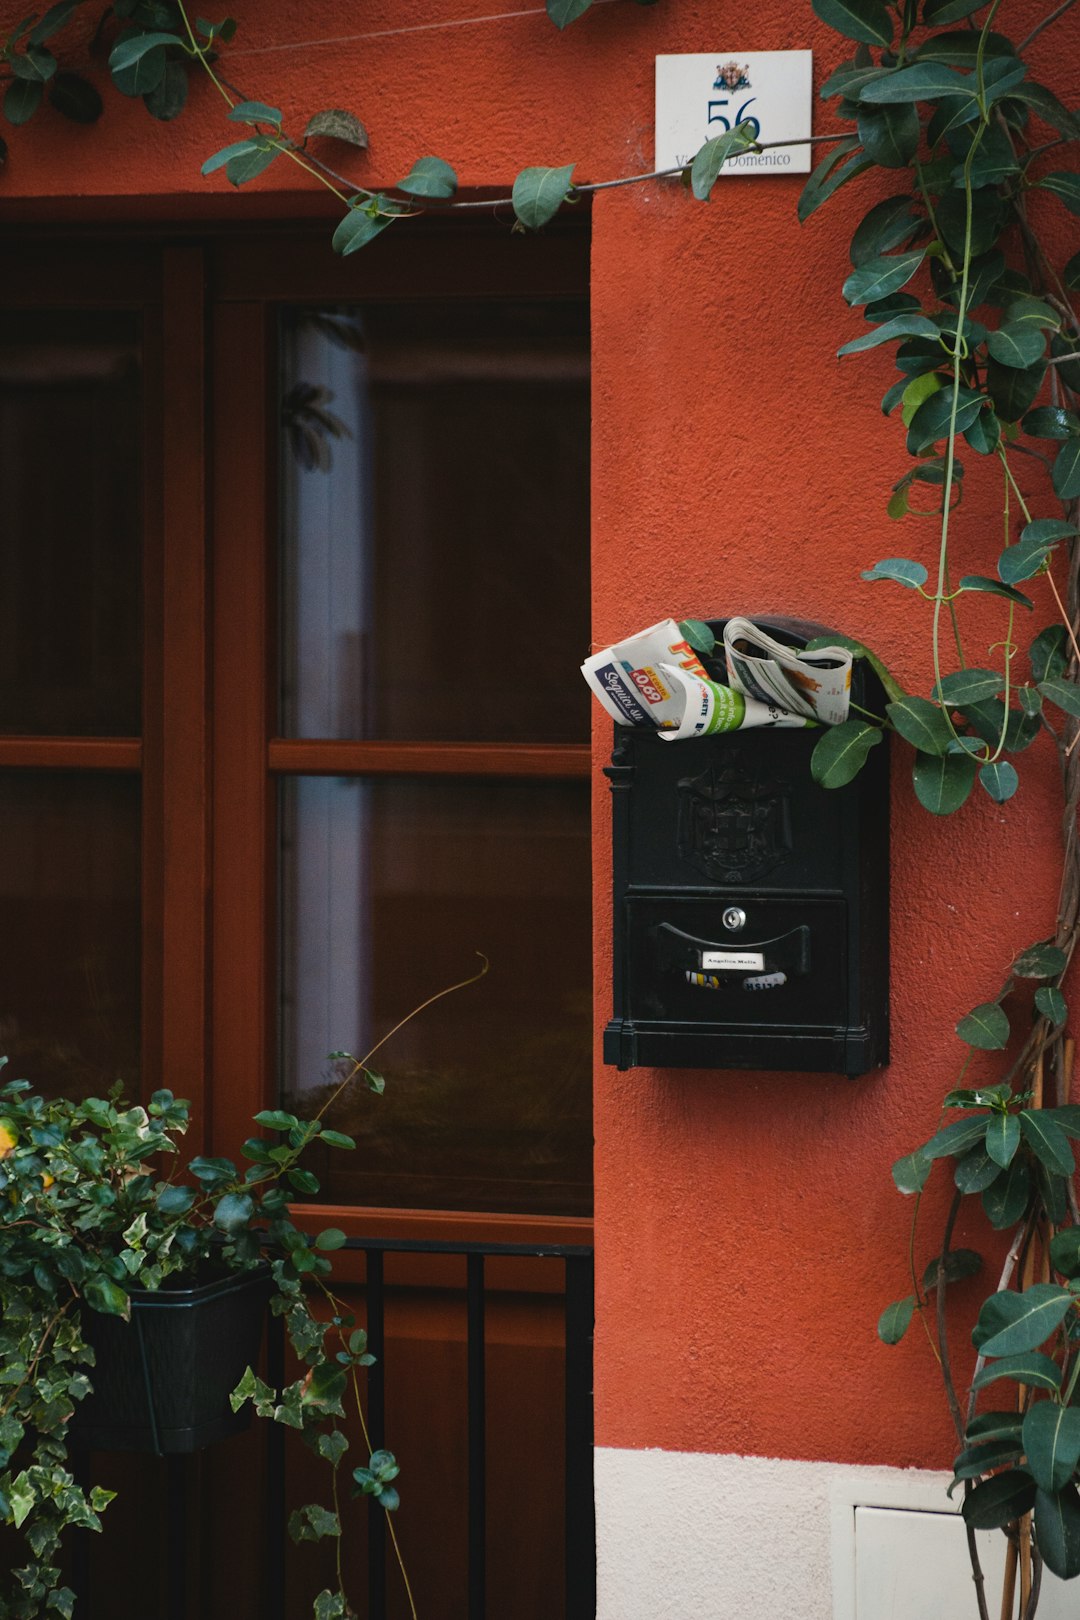 black mail box mounted on brown brick wall